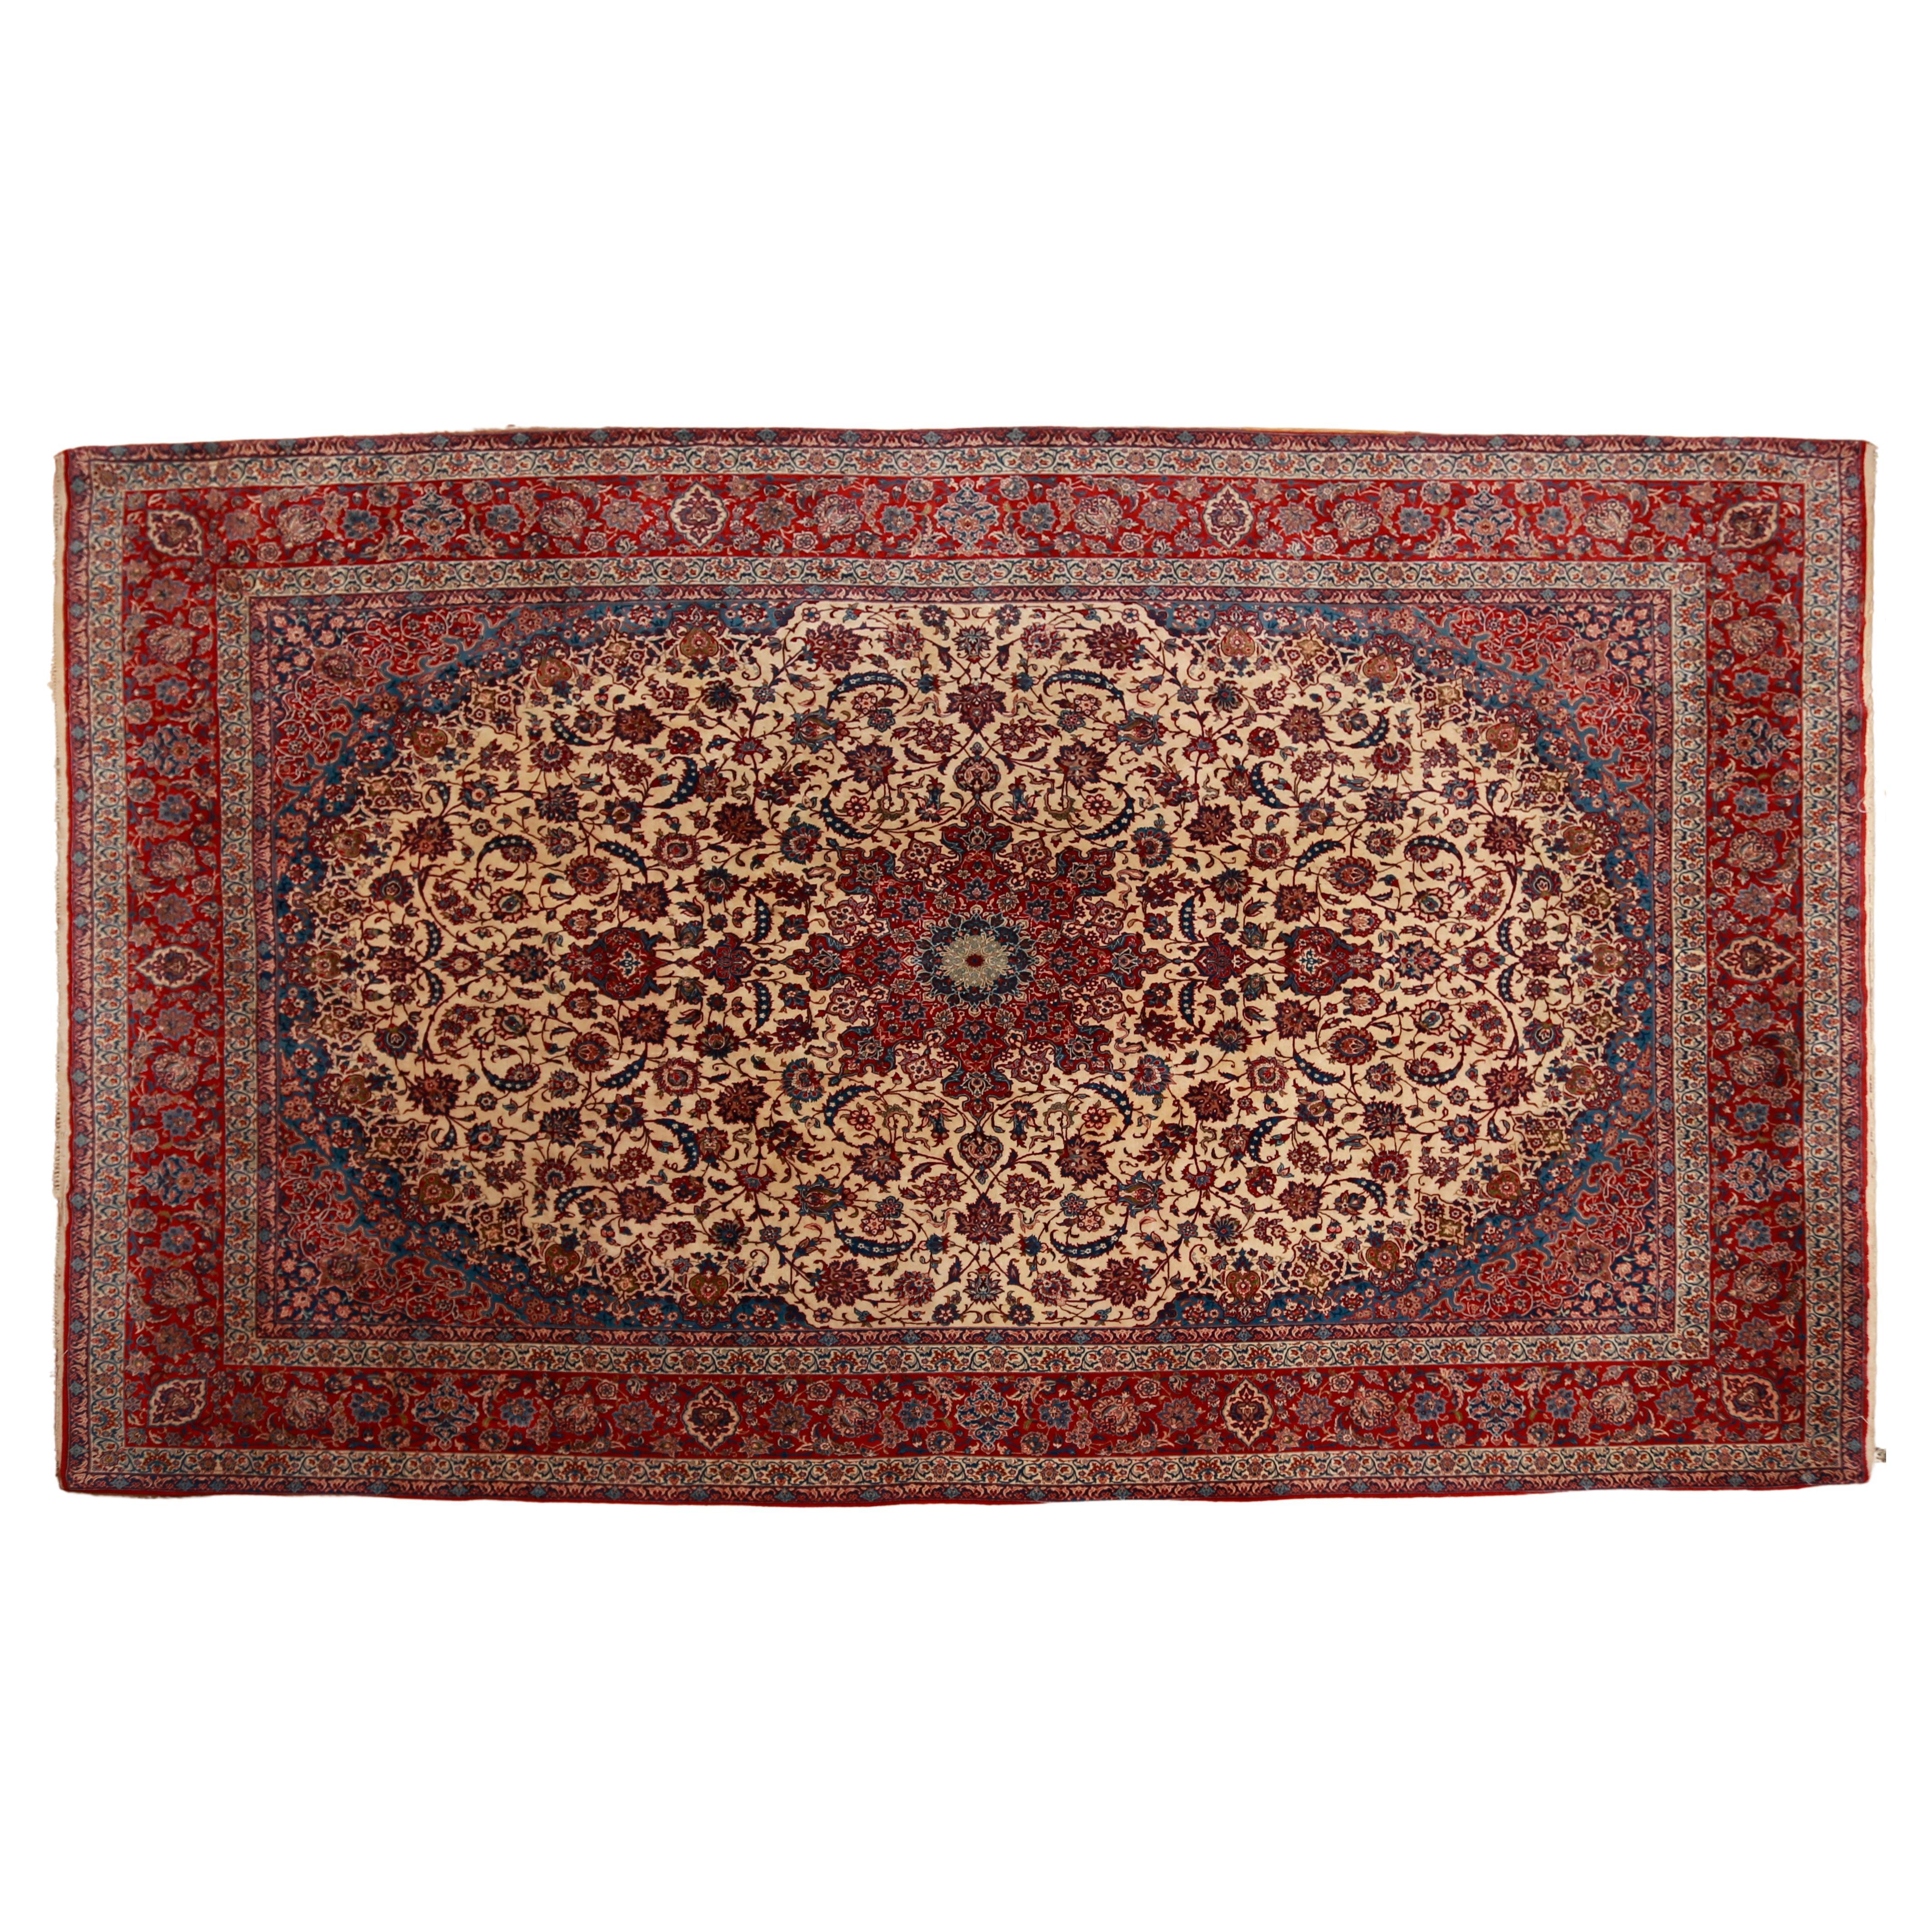 Isfahan Persian carpet 400 X 260 cm million knots per m2 For Sale